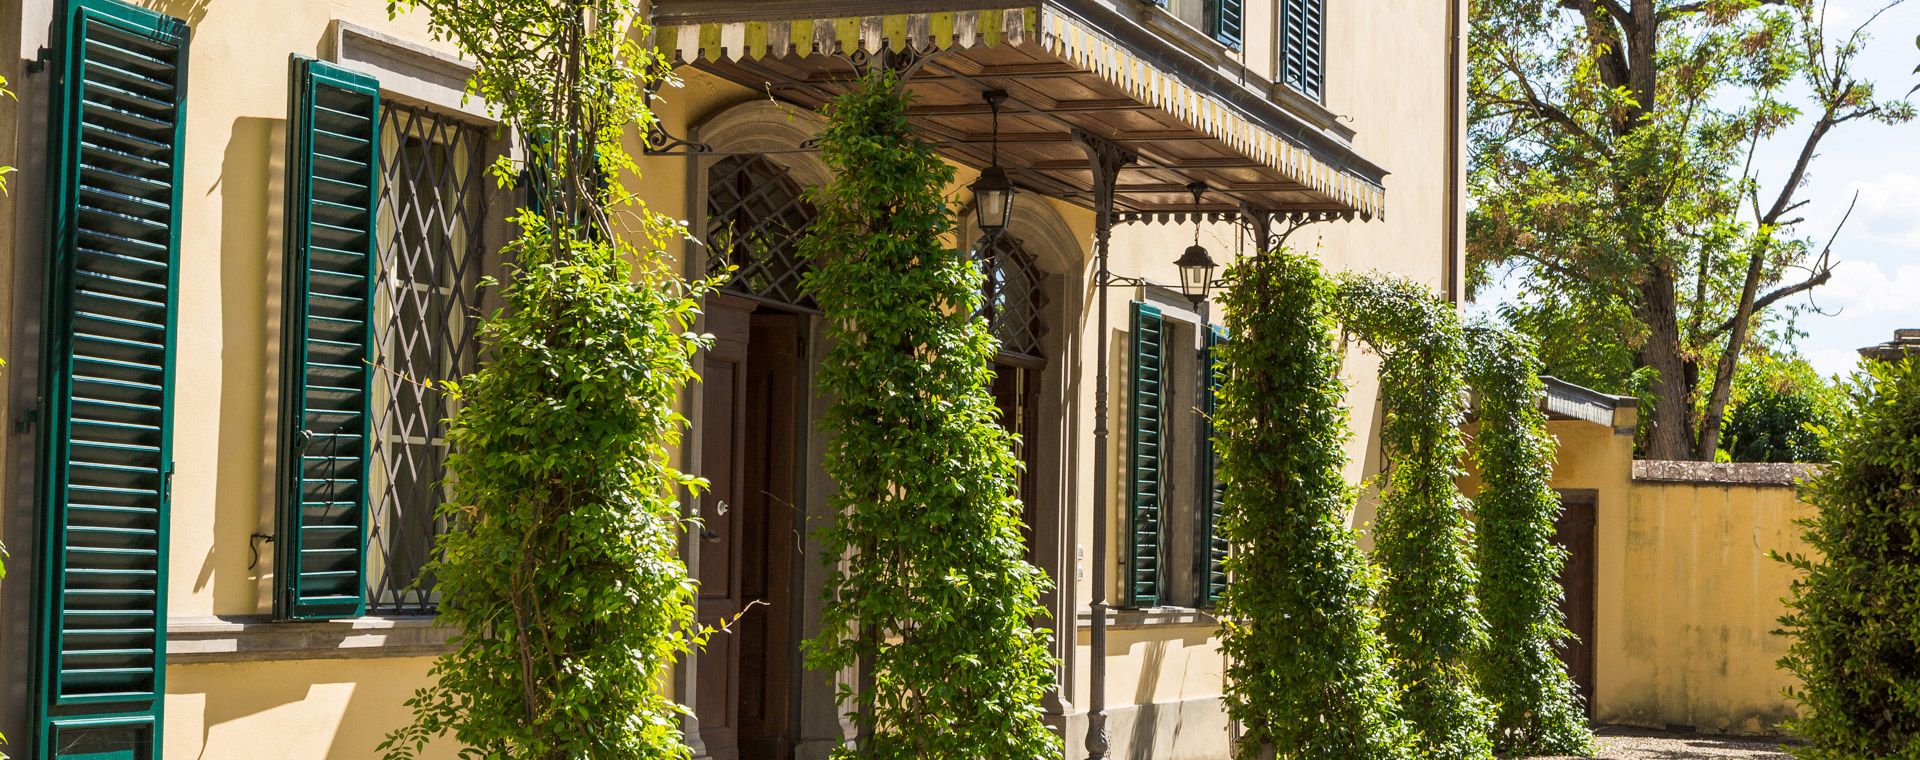 Toscana villa storica italiana in vendita